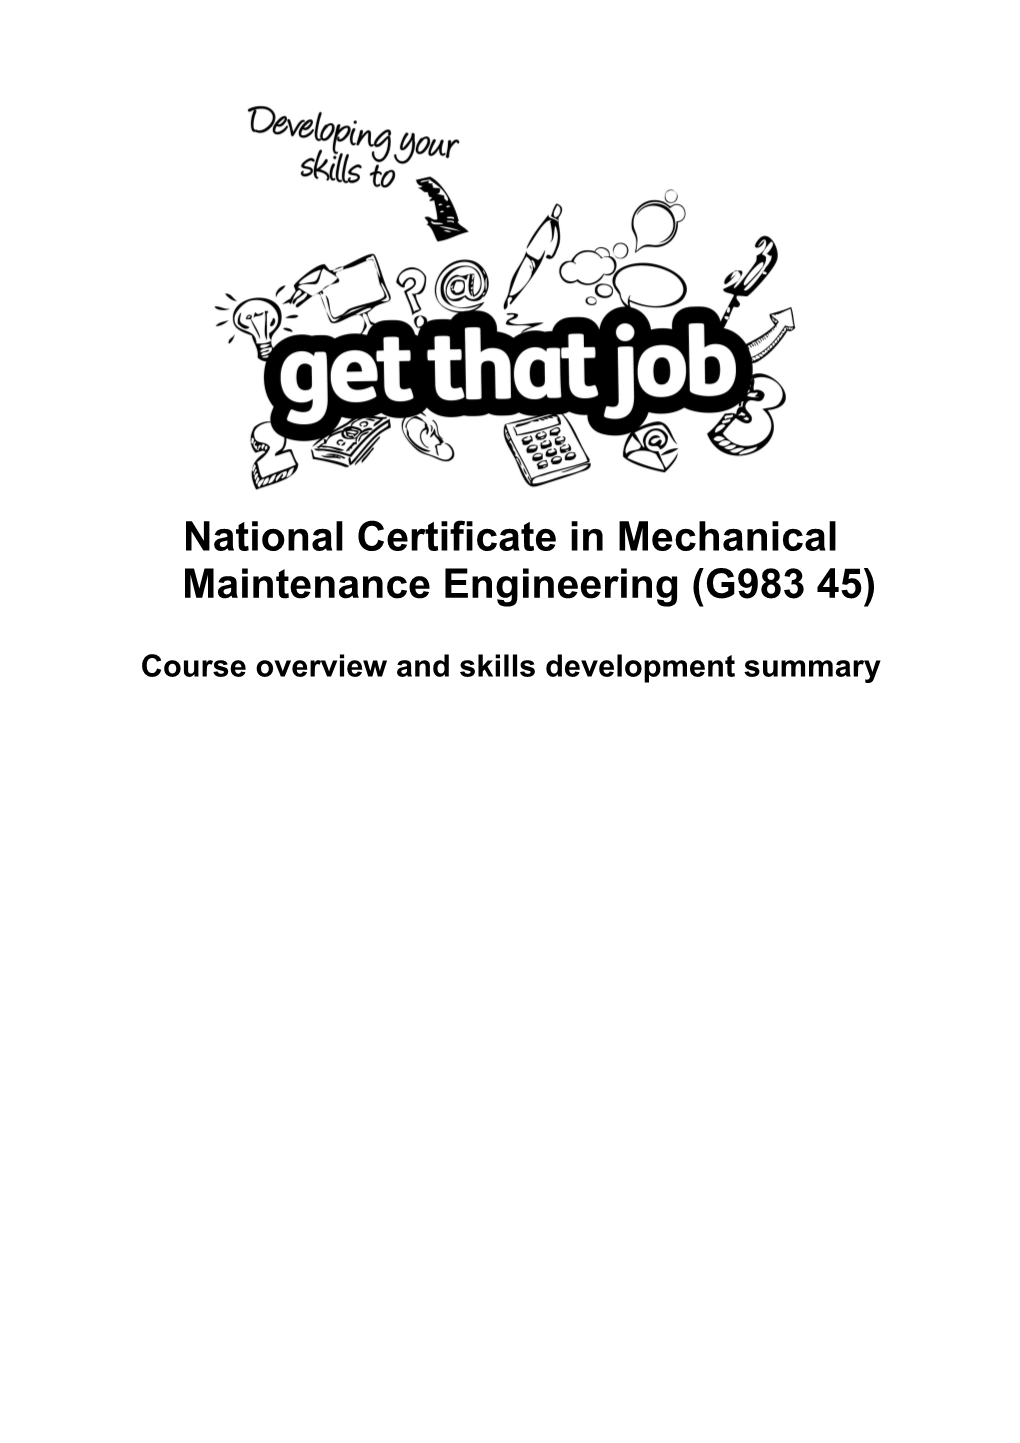 National Certificate in Mechanical Maintenance Engineering (G983 45)